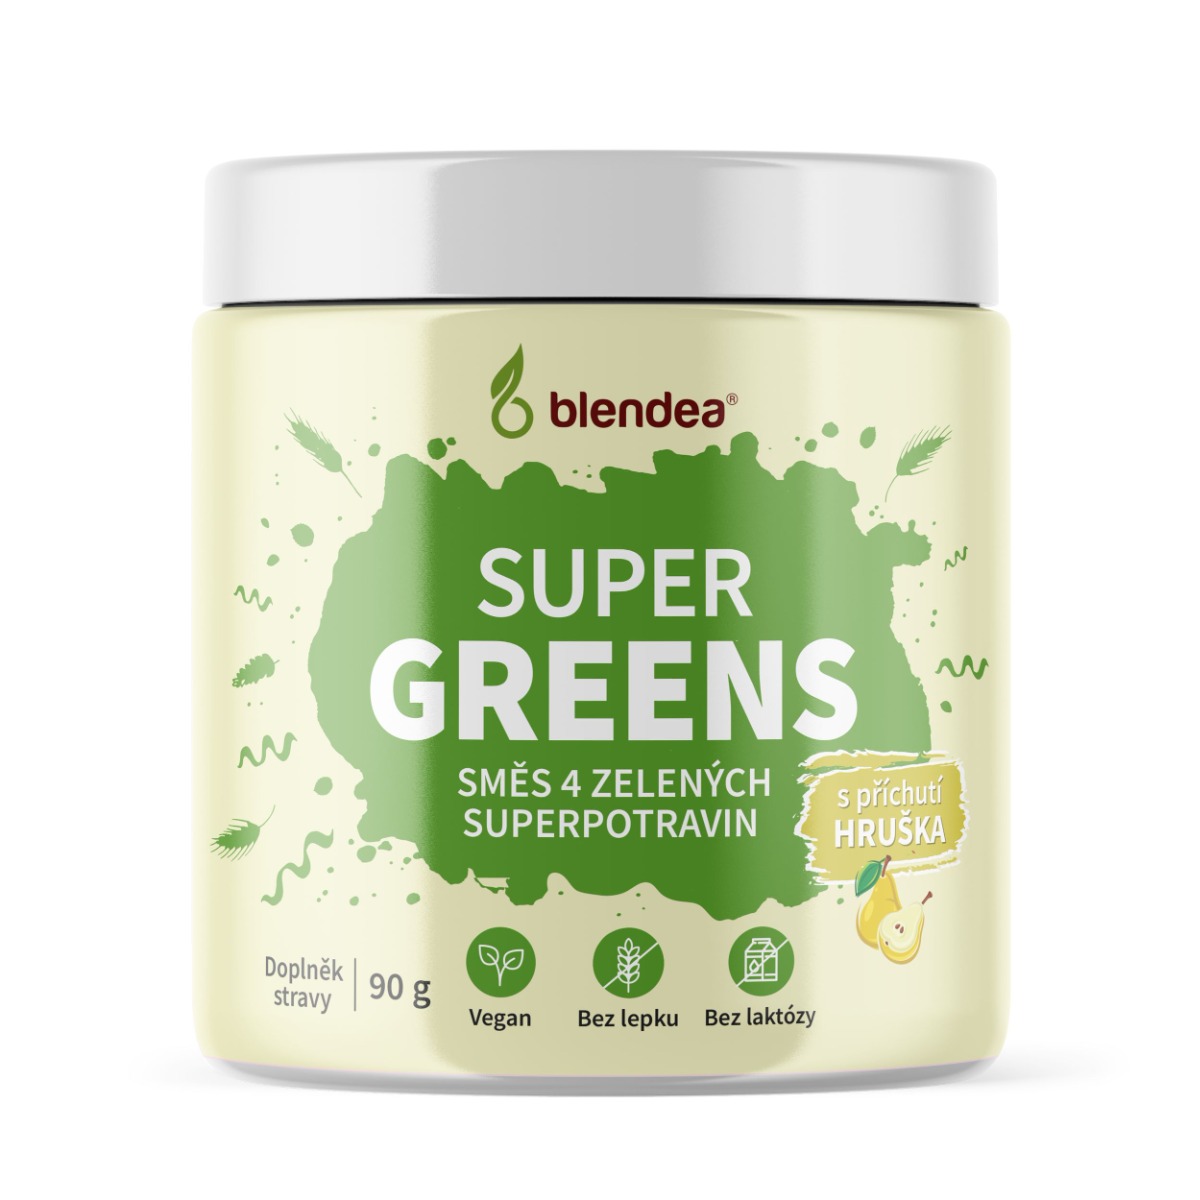 Blendea Super Greens hruška 90 g Blendea